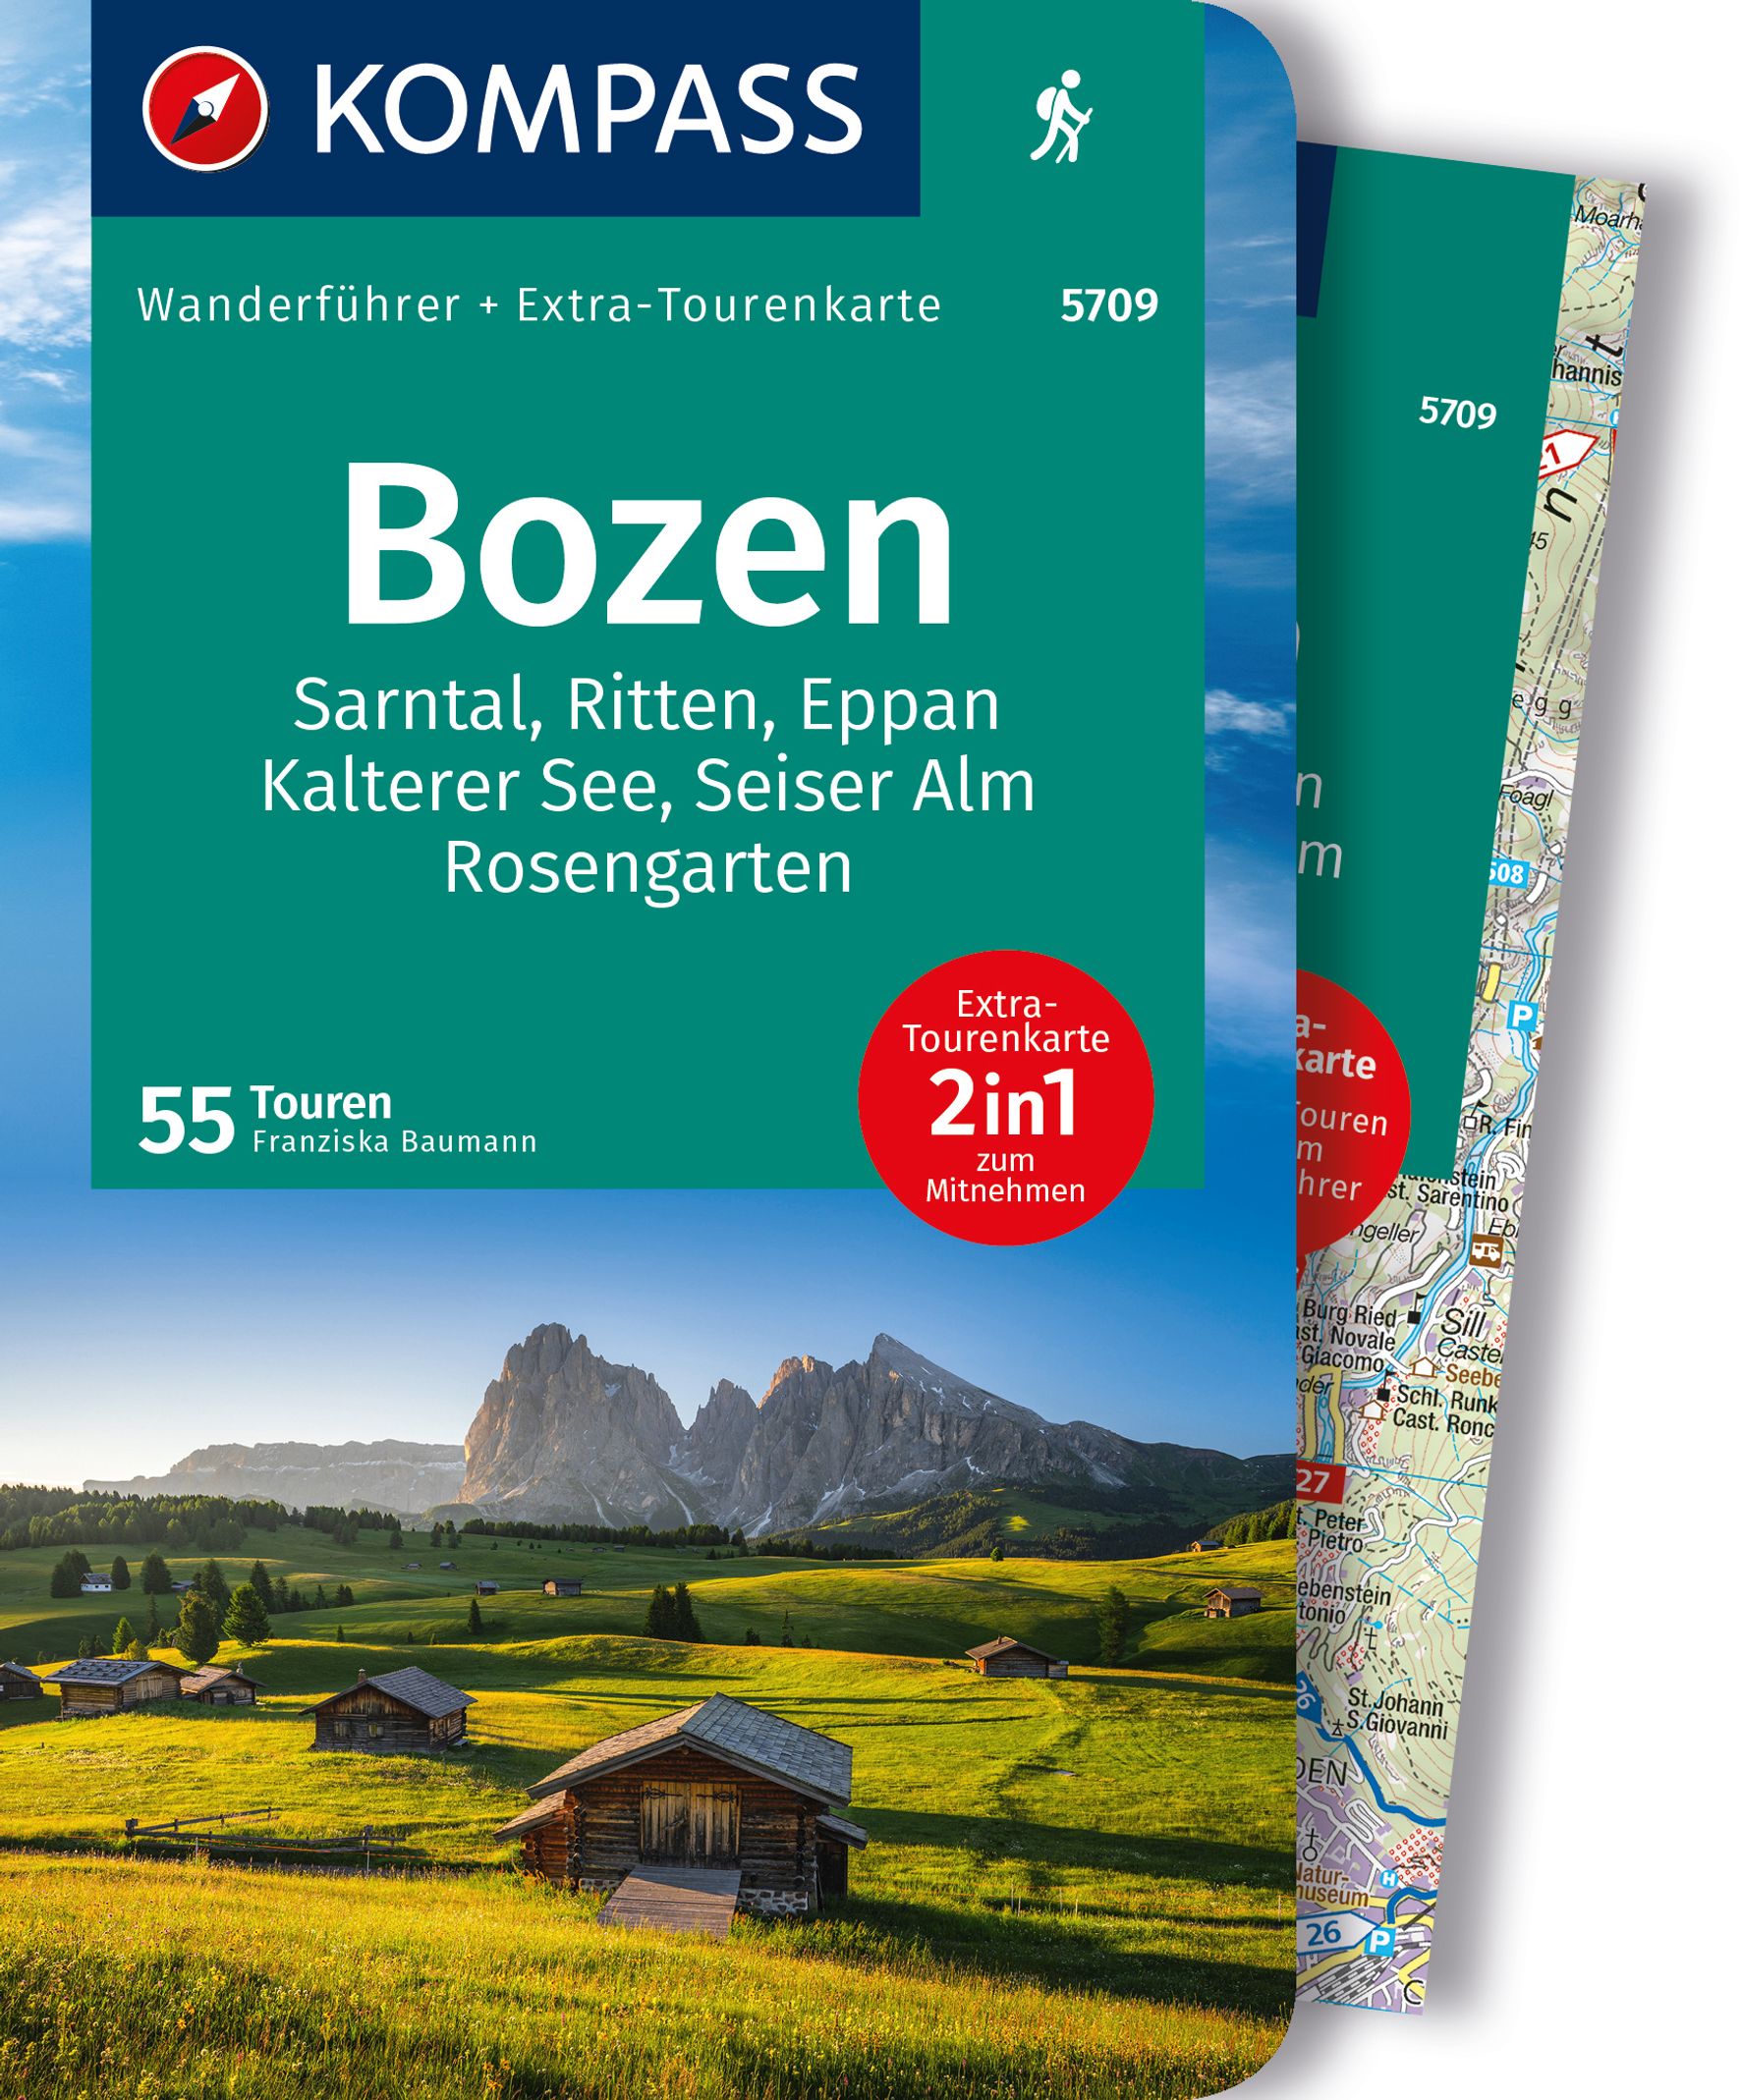 MAIRDUMONT Bozen, Sarntal, Ritten, Eppan, Kalterer See, Seiser Alm, Rosengarten, 55 Touren mit Extra-Tourenkarte